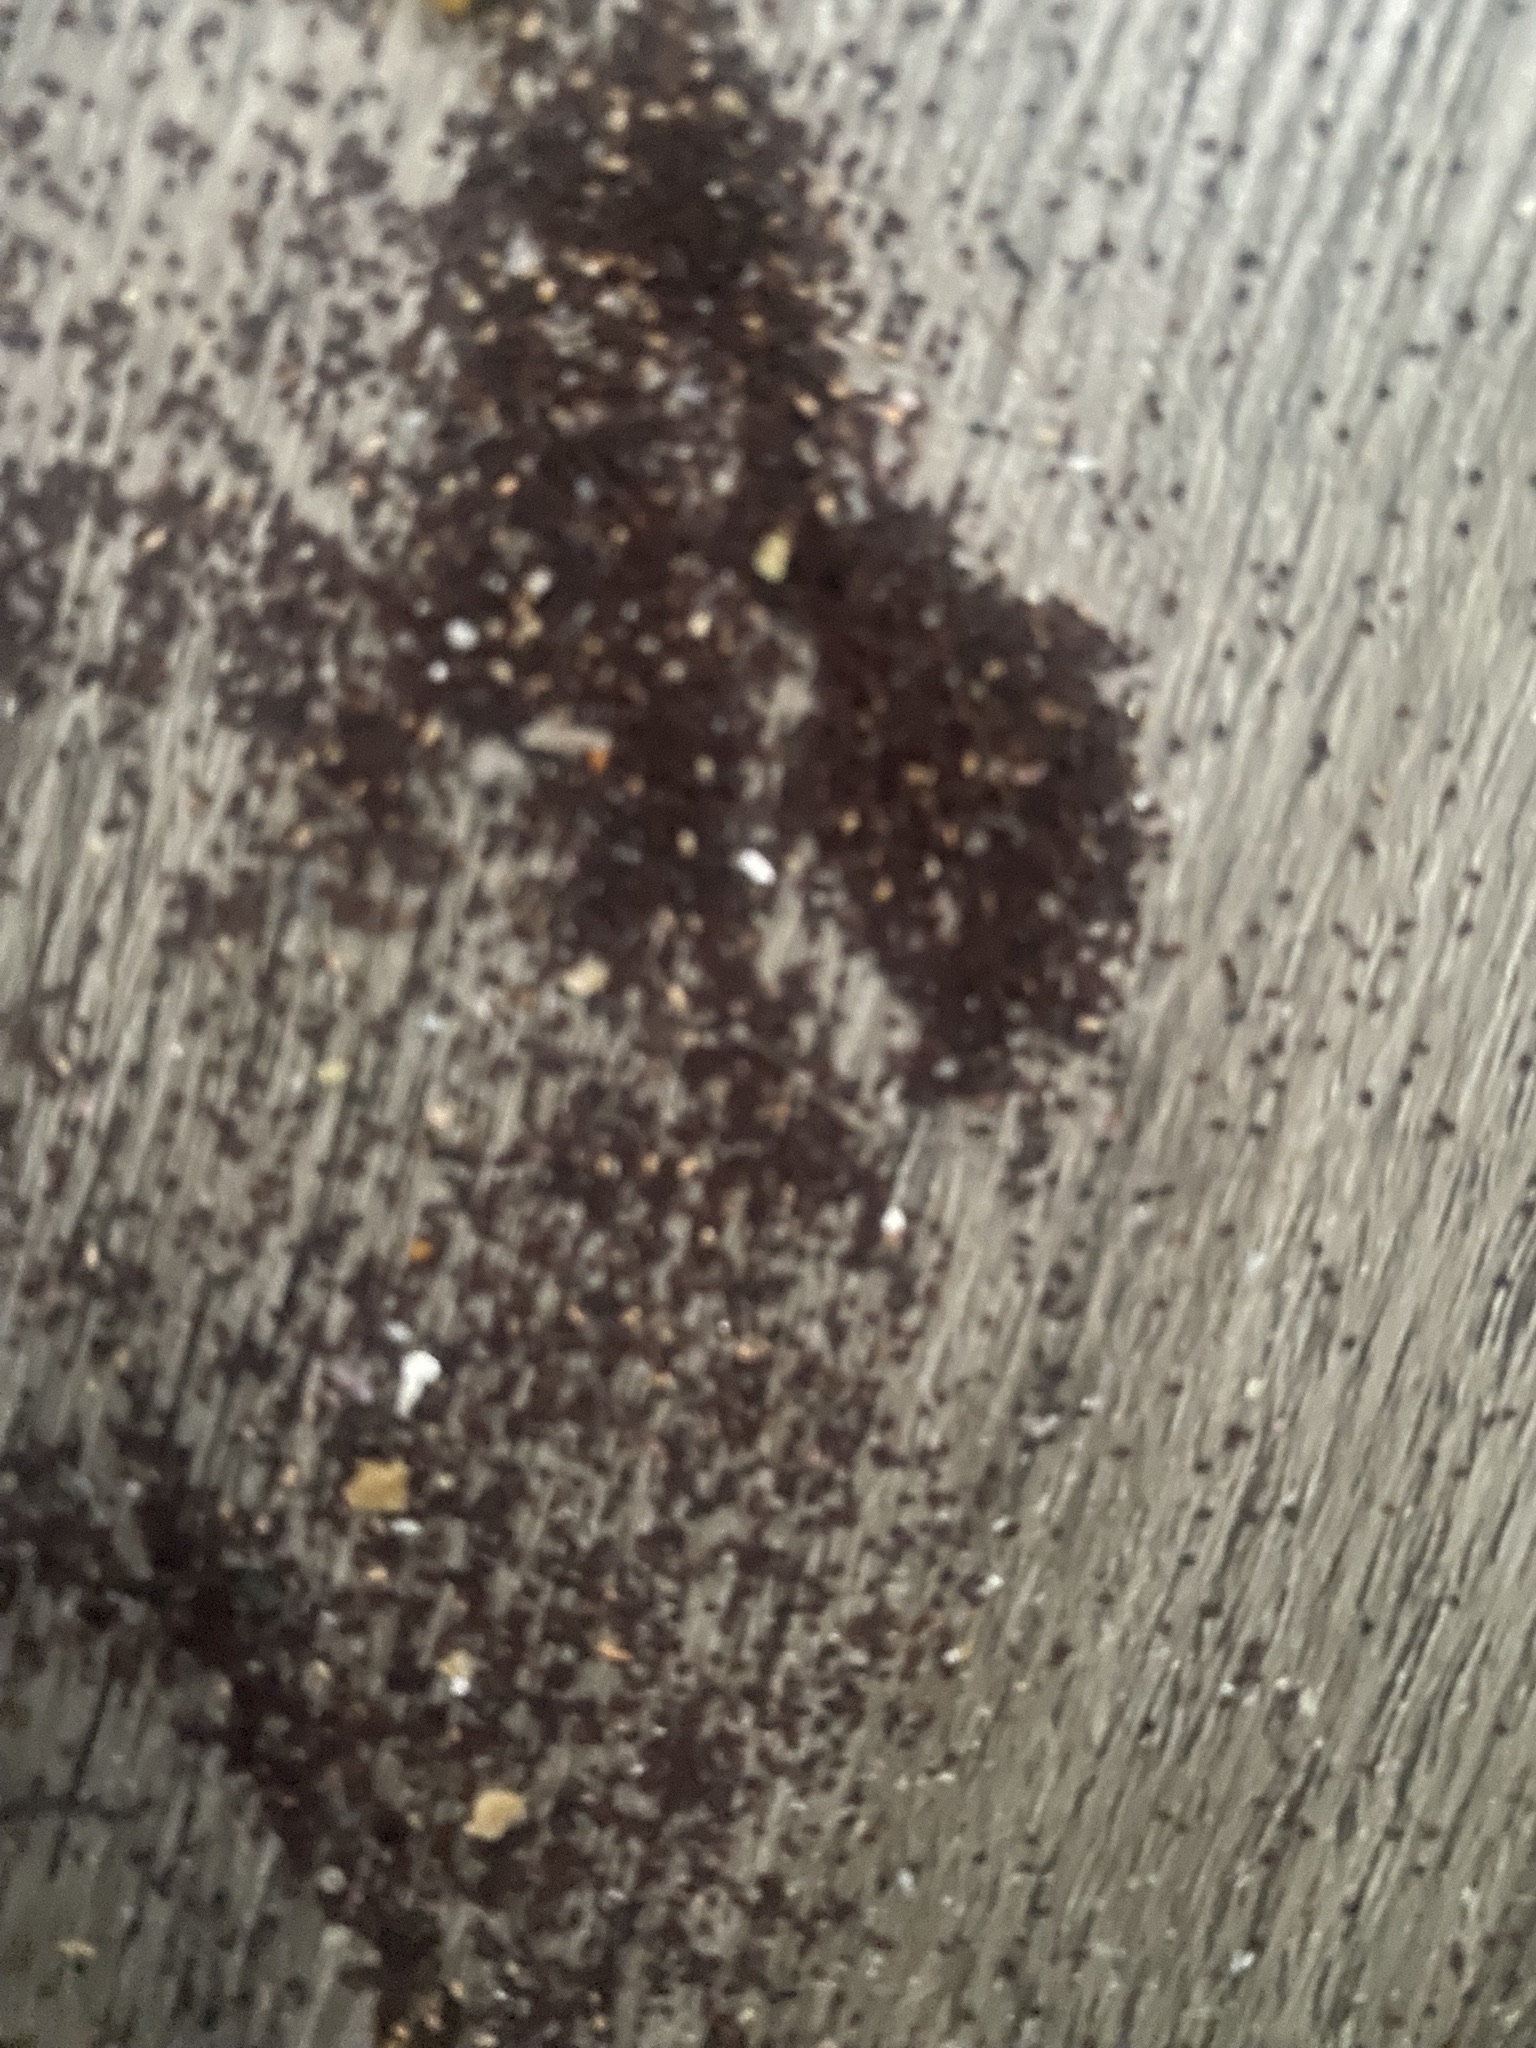 Termites droppings